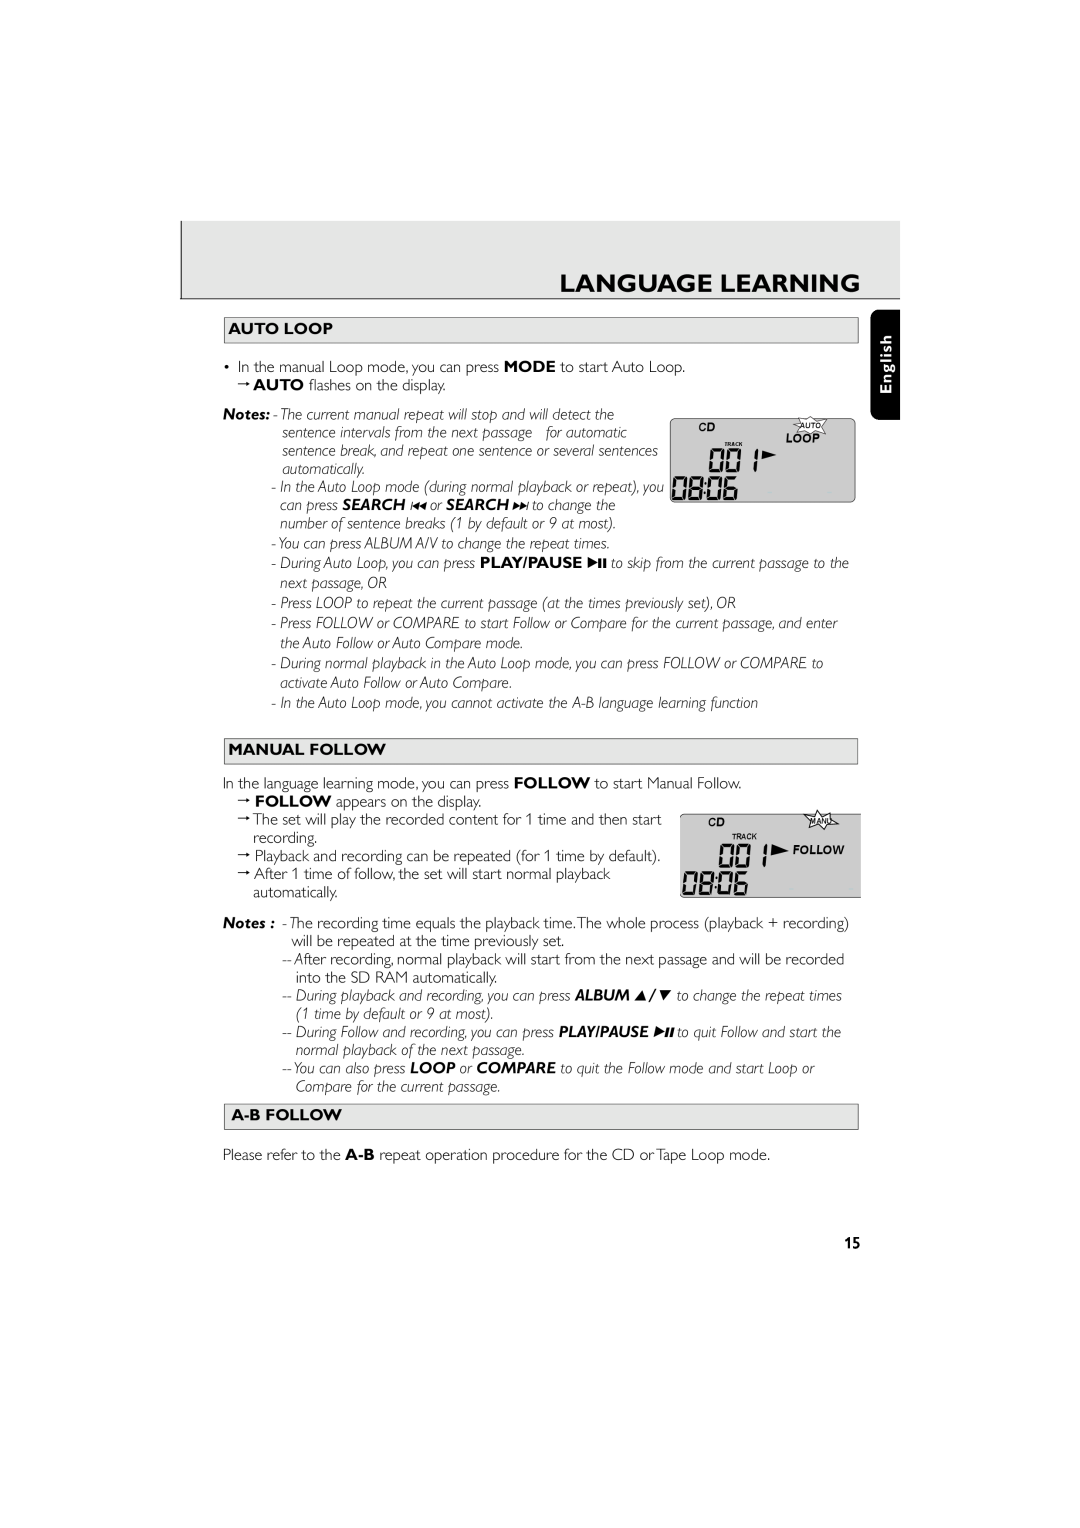 Philips AZ 6188 manual Language Learning, Auto Loop, Manual Follow, A-Bfollow, English 